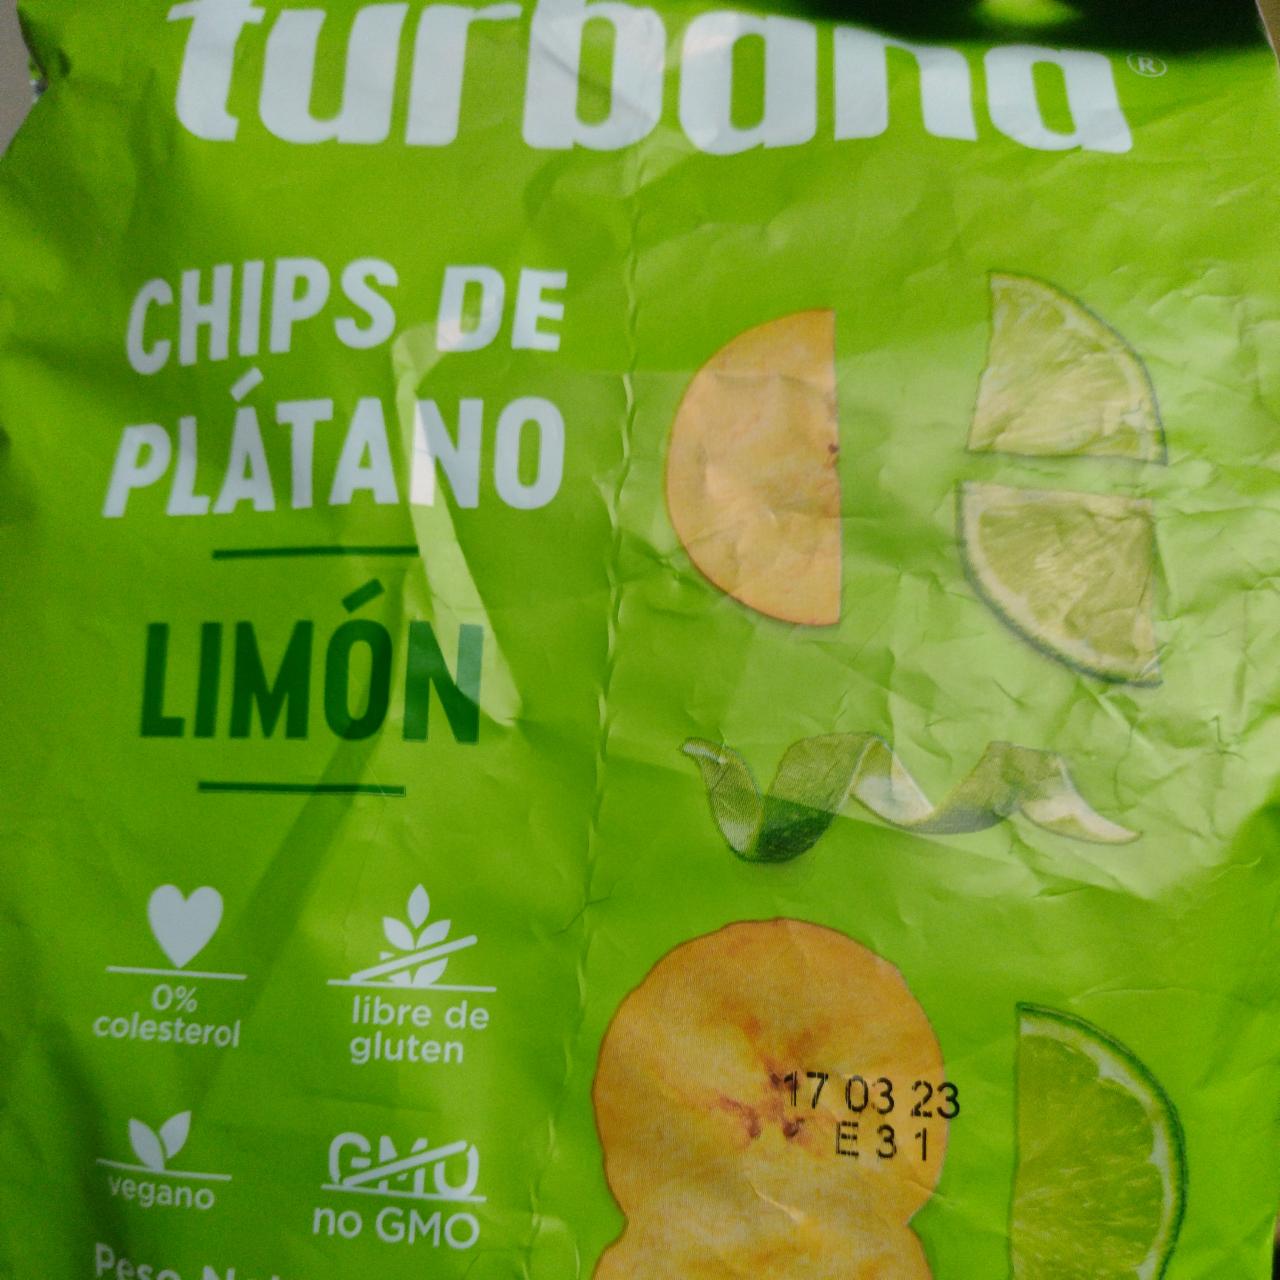 Zdjęcia - Chips de plátano limon Turbana